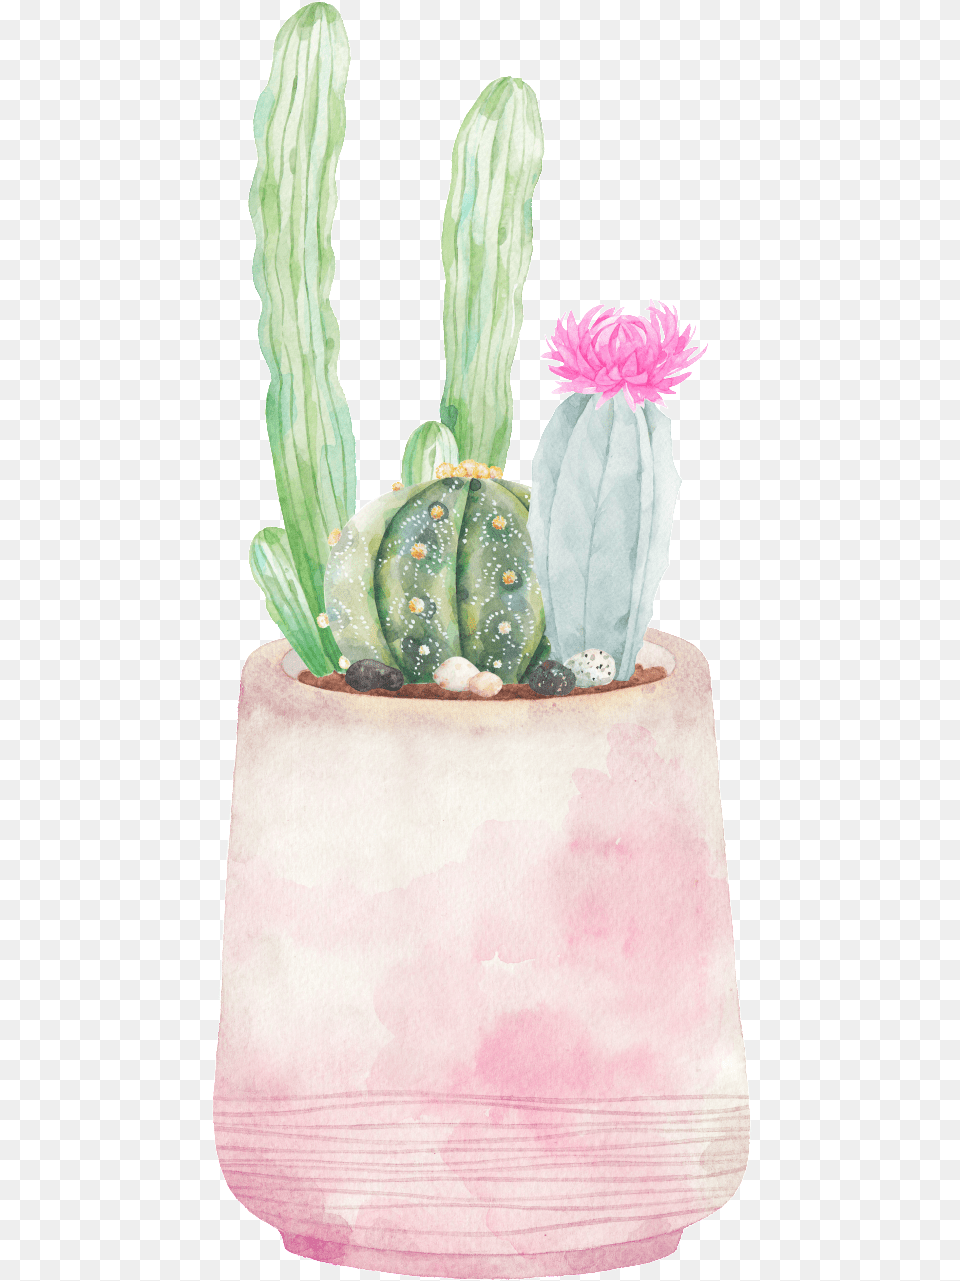 Hand Painted Three Varieties Of Cactus Transparent San Pedro Cactus, Plant, Birthday Cake, Cake, Cream Png Image